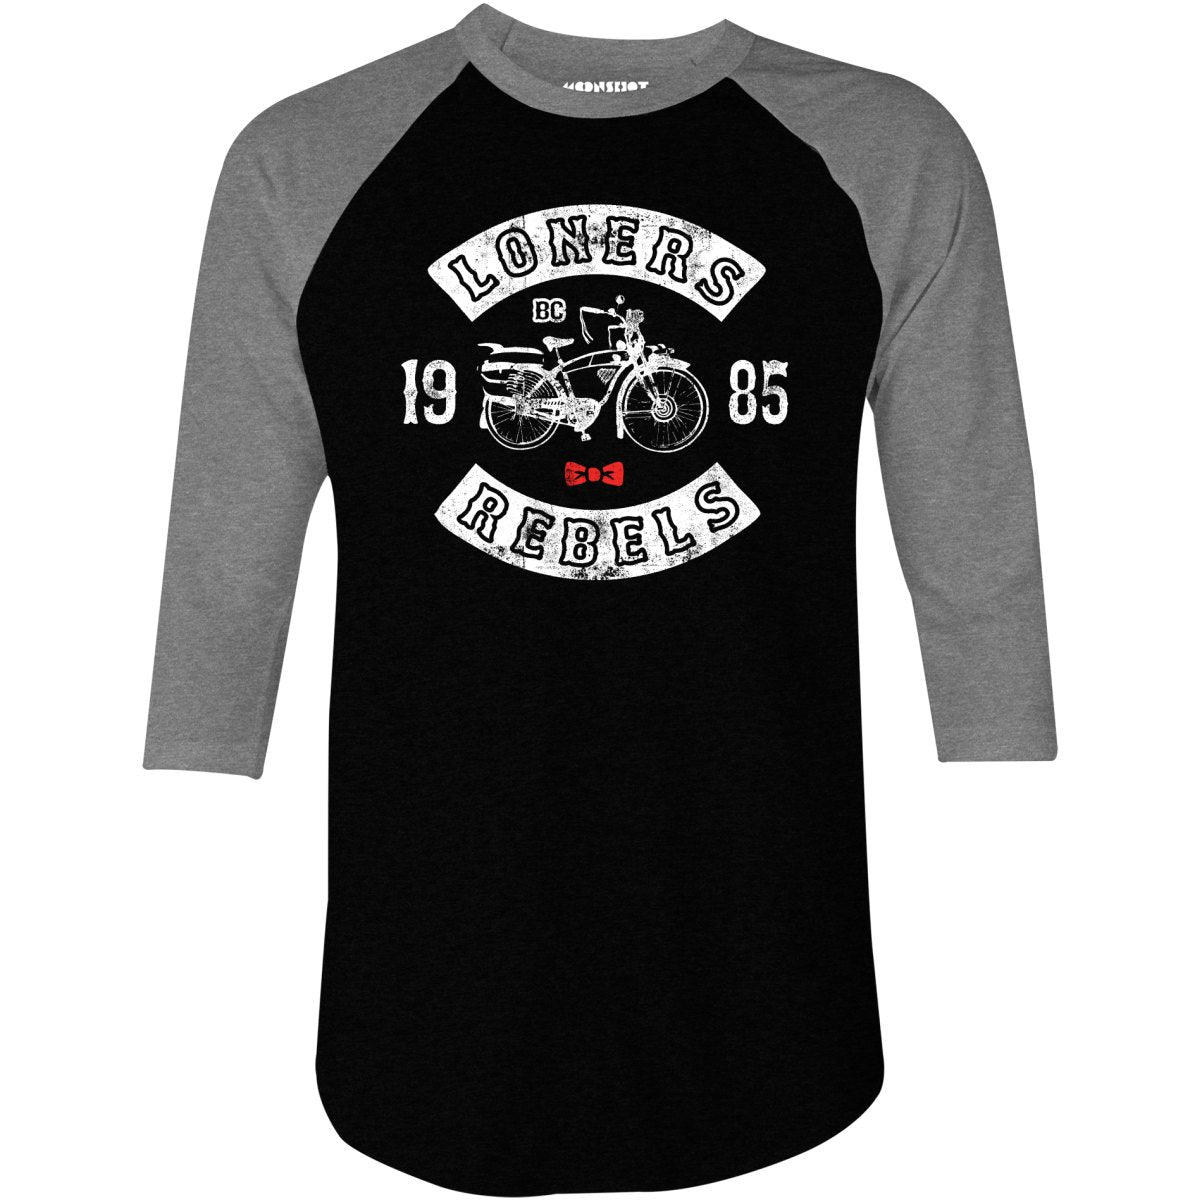 Loners & Rebels Bicycle Club - 3/4 Sleeve Raglan T-Shirt